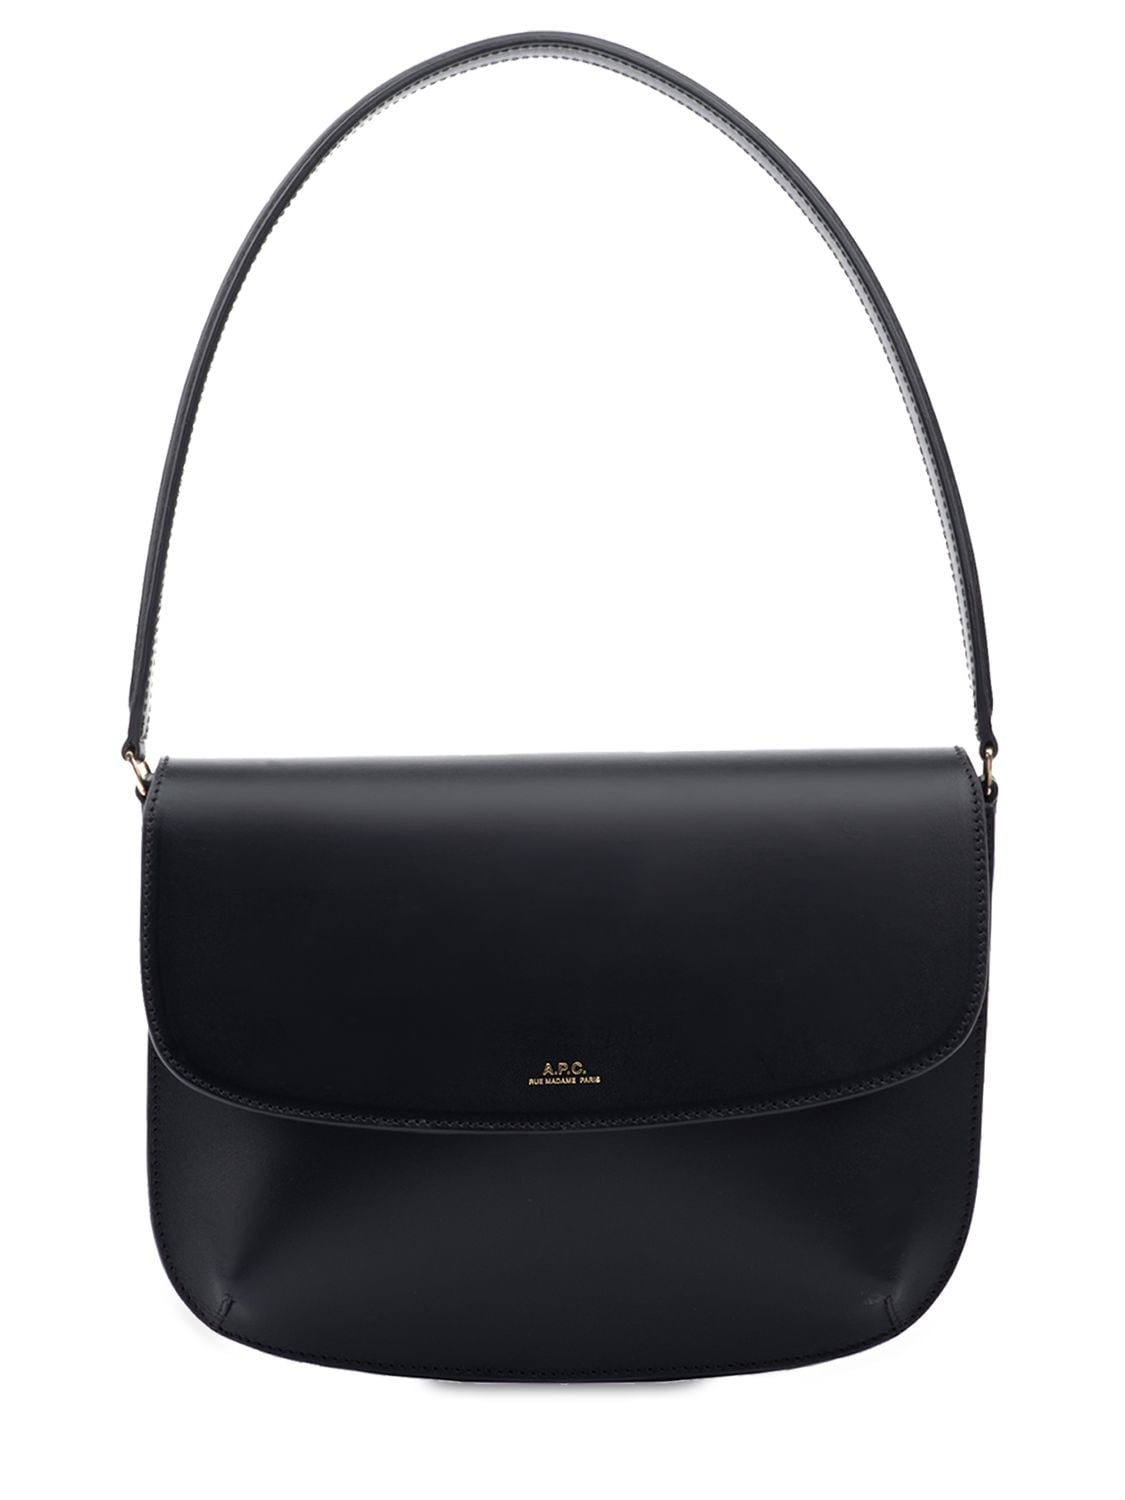 Apc Sarah Leather Shoulder Bag In Black